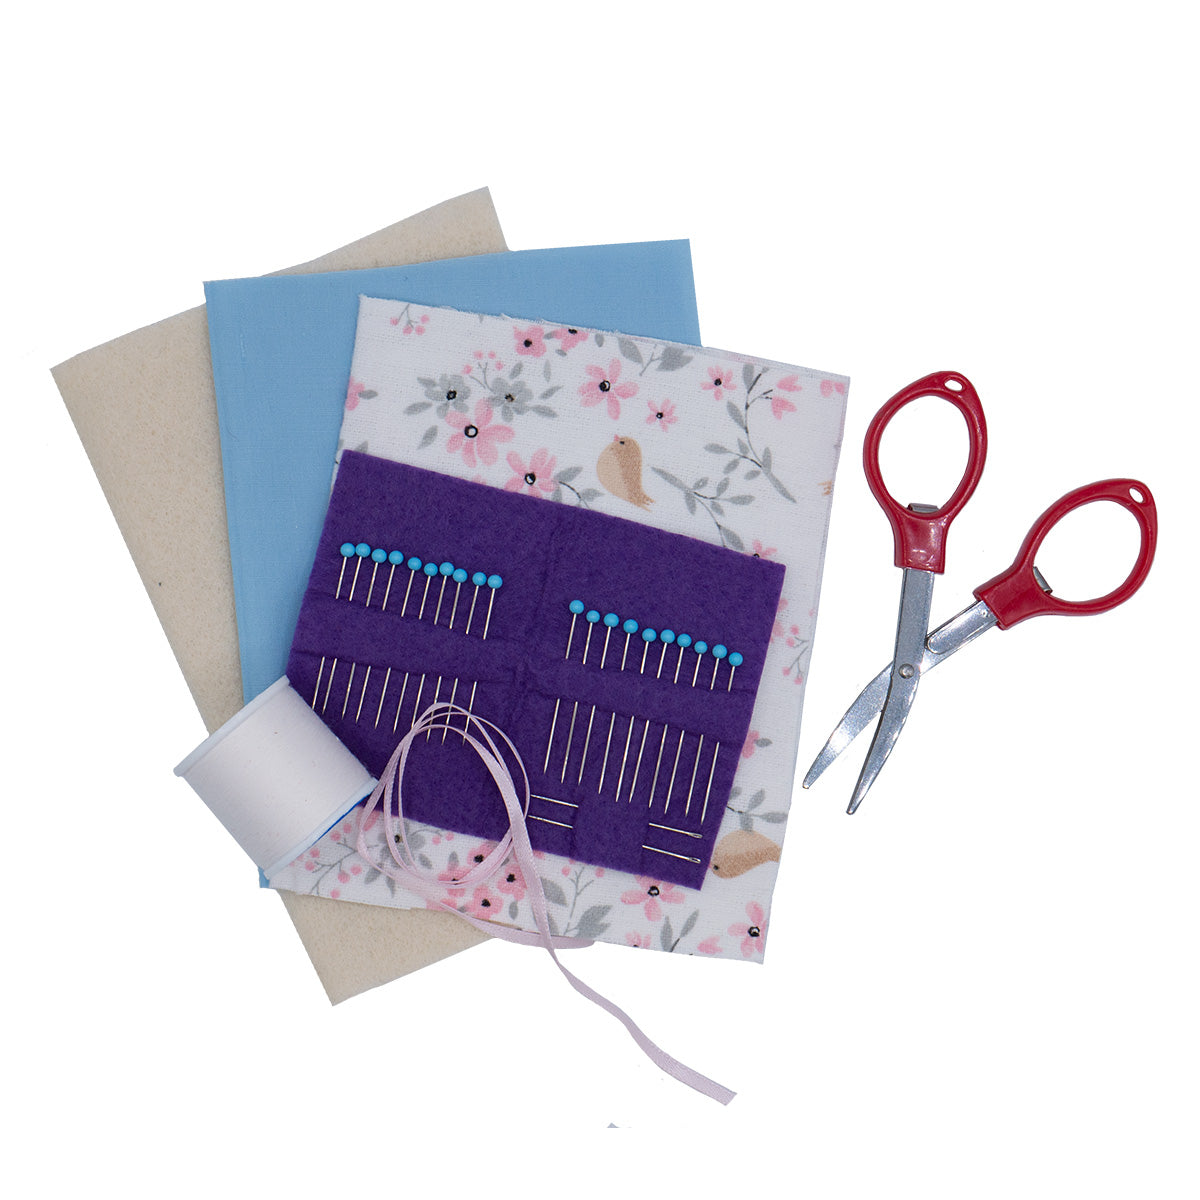 FSCO Needle Book Kit